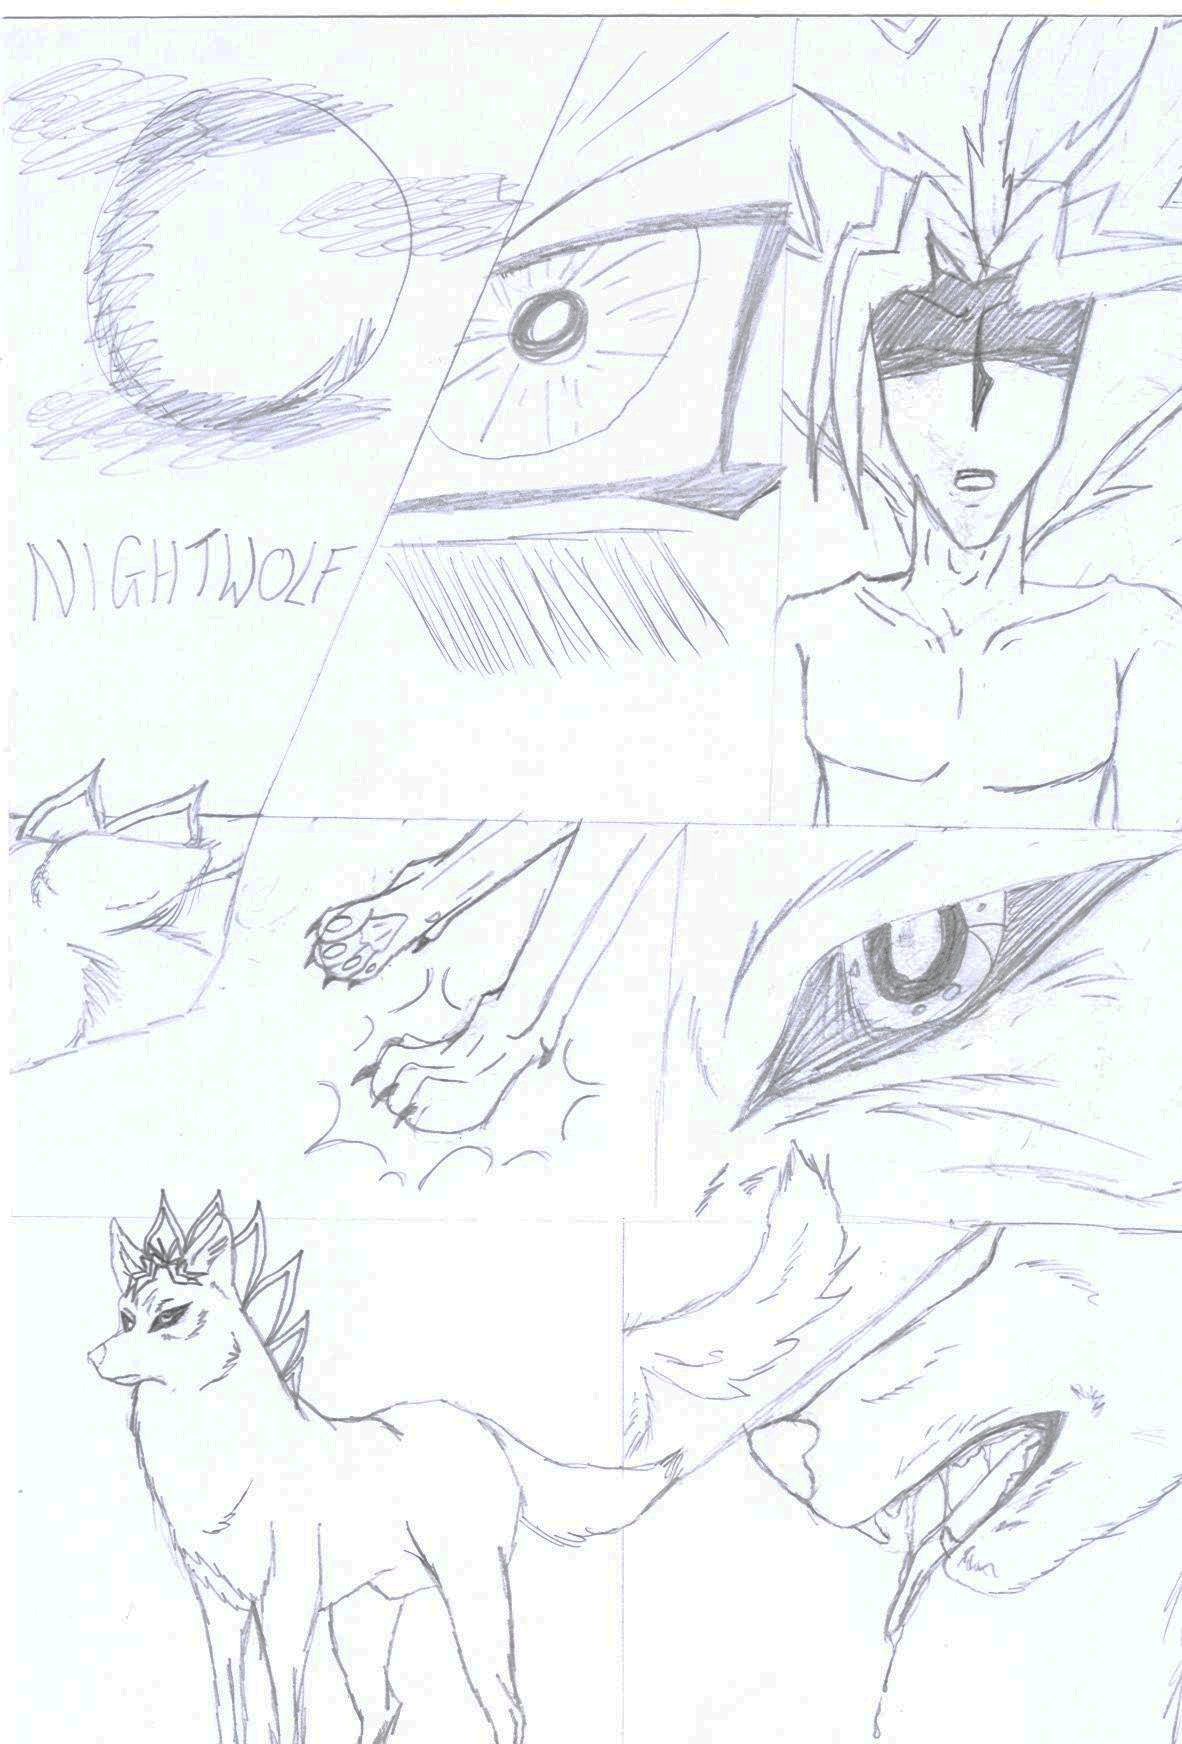 Nightwolf Page 1 by IluvAtem